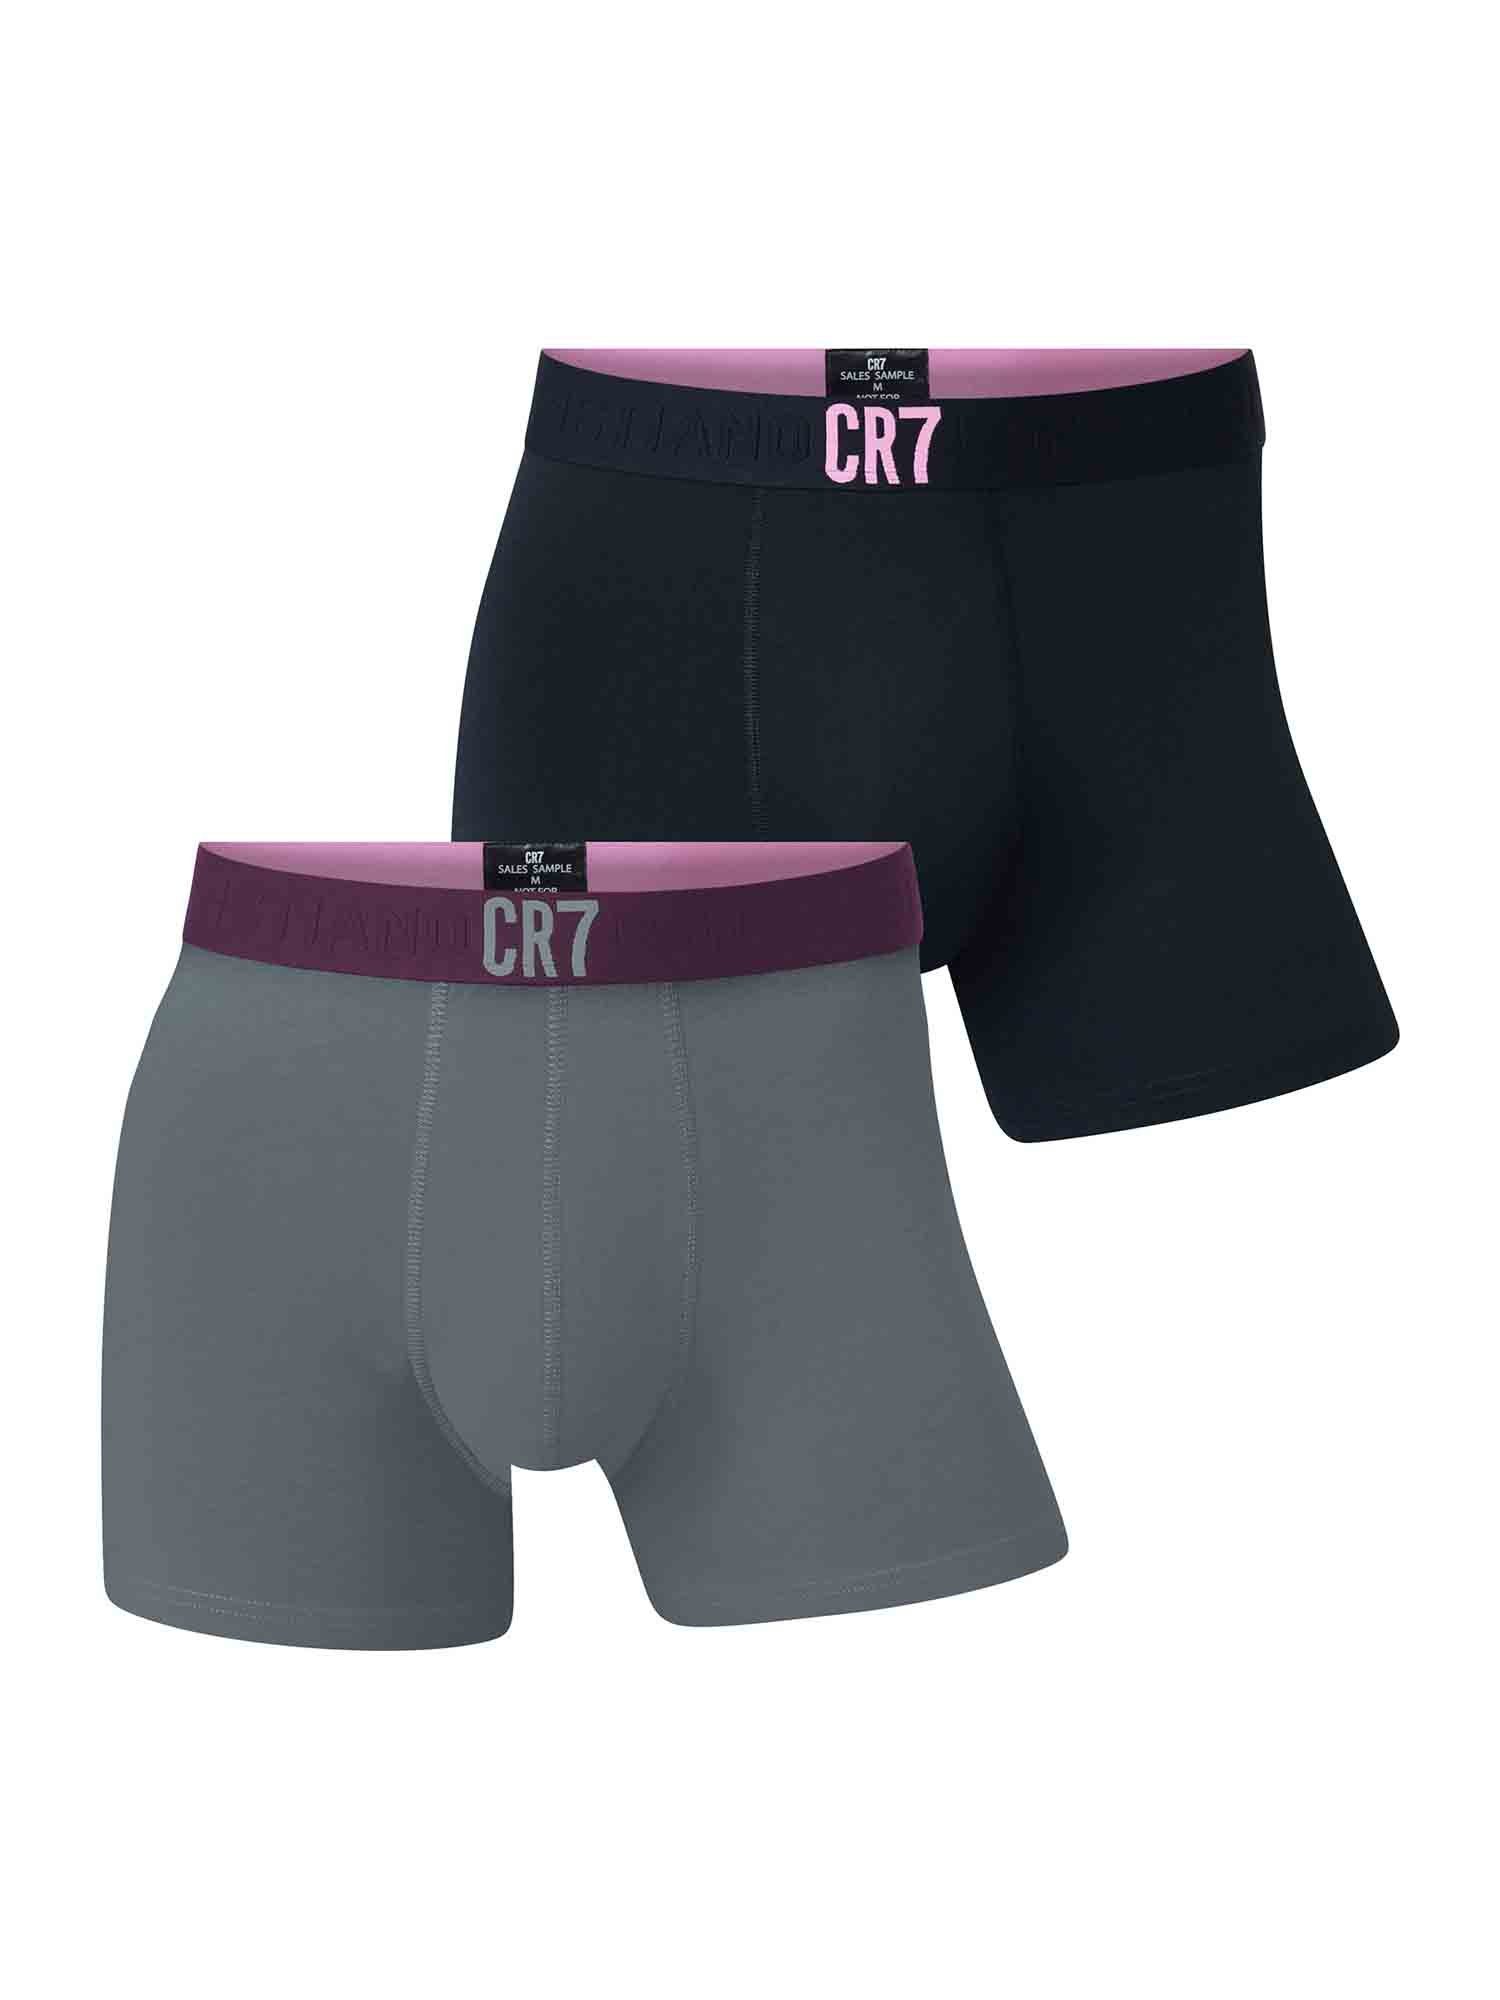 CR7 Retro Pants Herren Männer Boxershorts Retro Pants Trunks Multipack (2-St) Multi 35